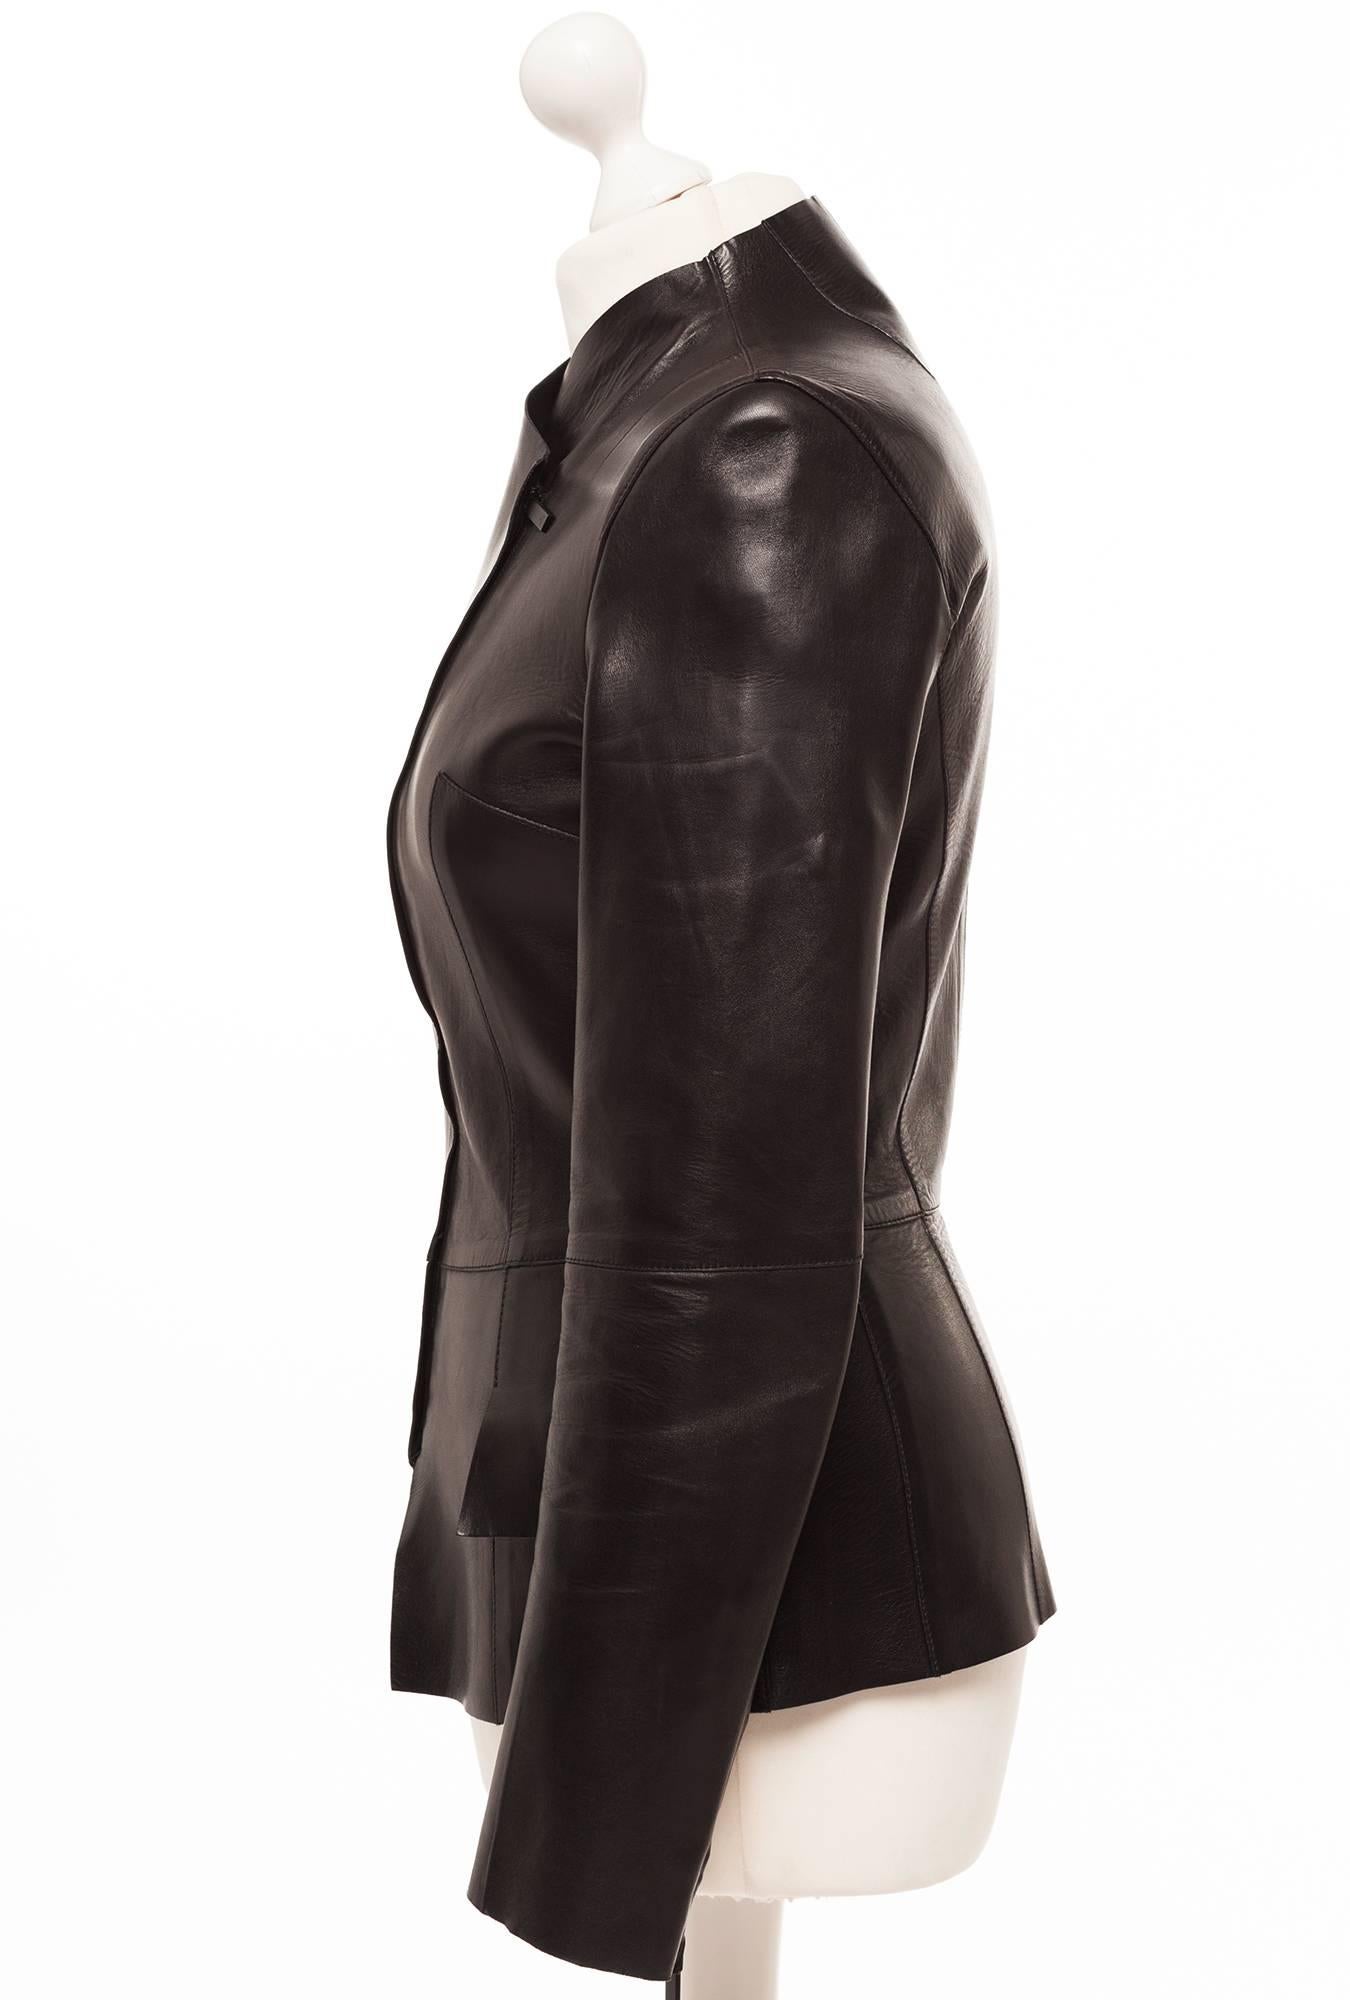 Mid 90s Gucci by Tom Ford asymmetrical Leather Blazer, Sz. M 1